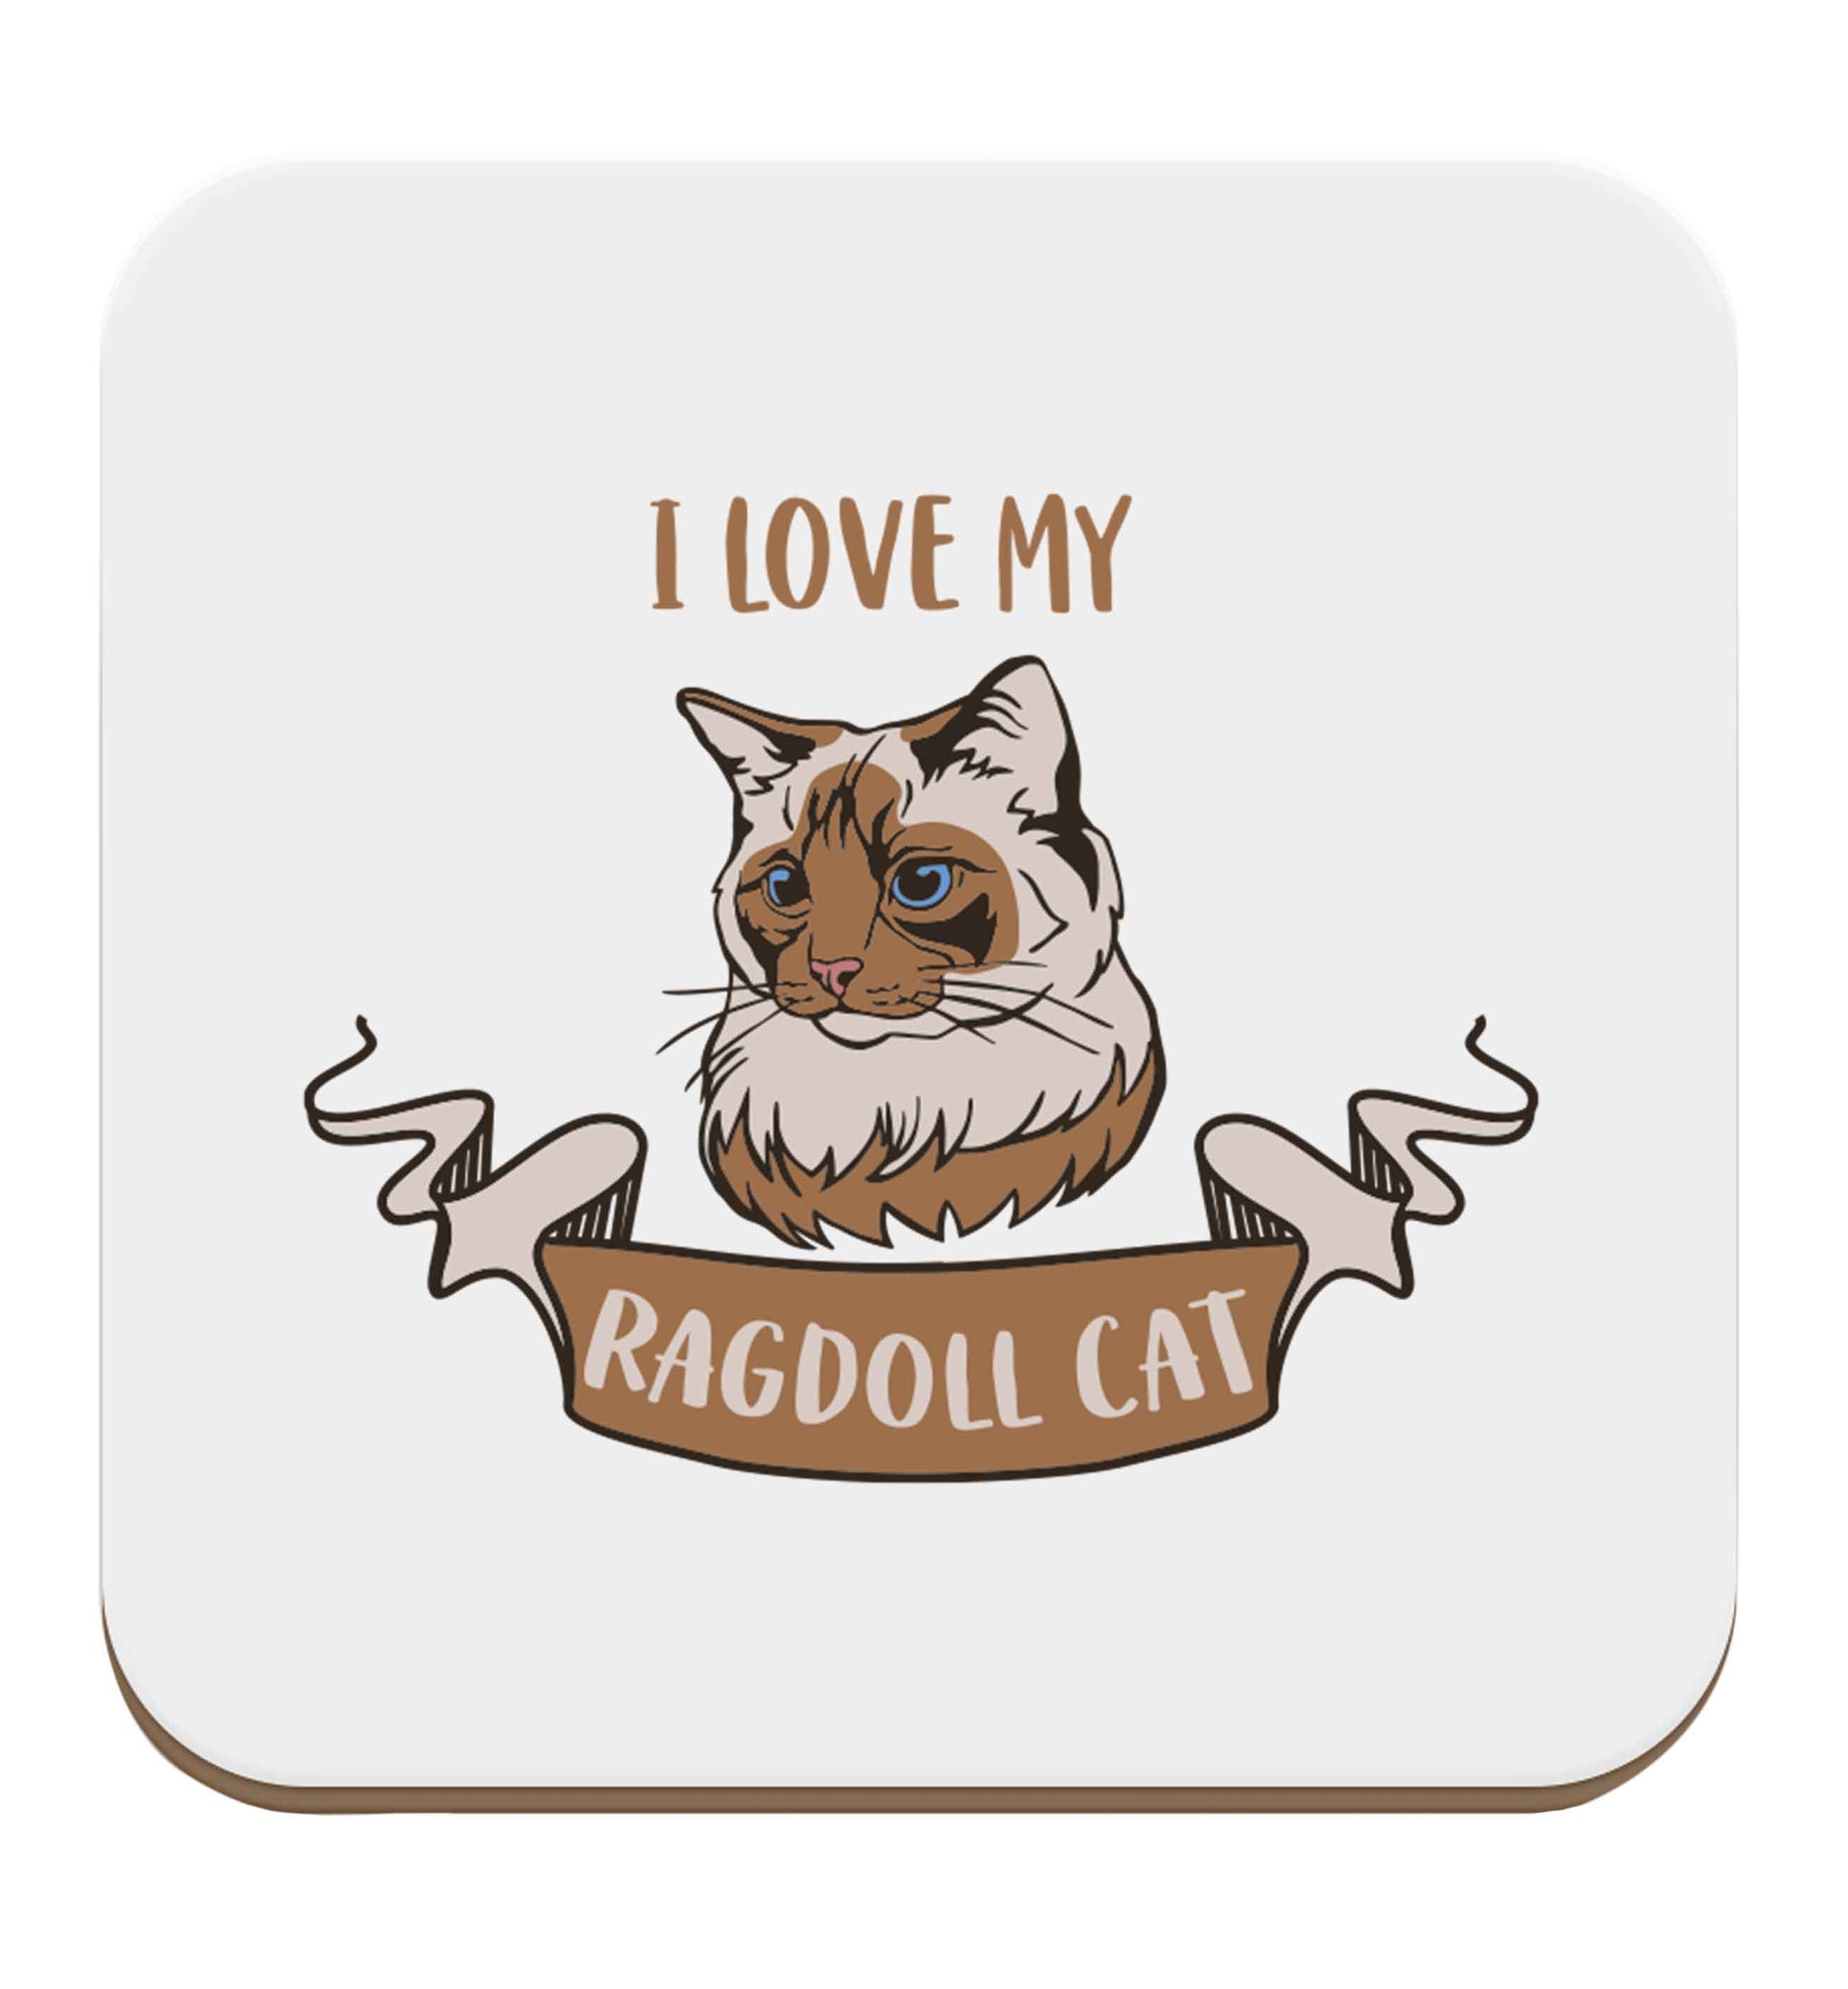 I love my ragdoll cat set of four coasters